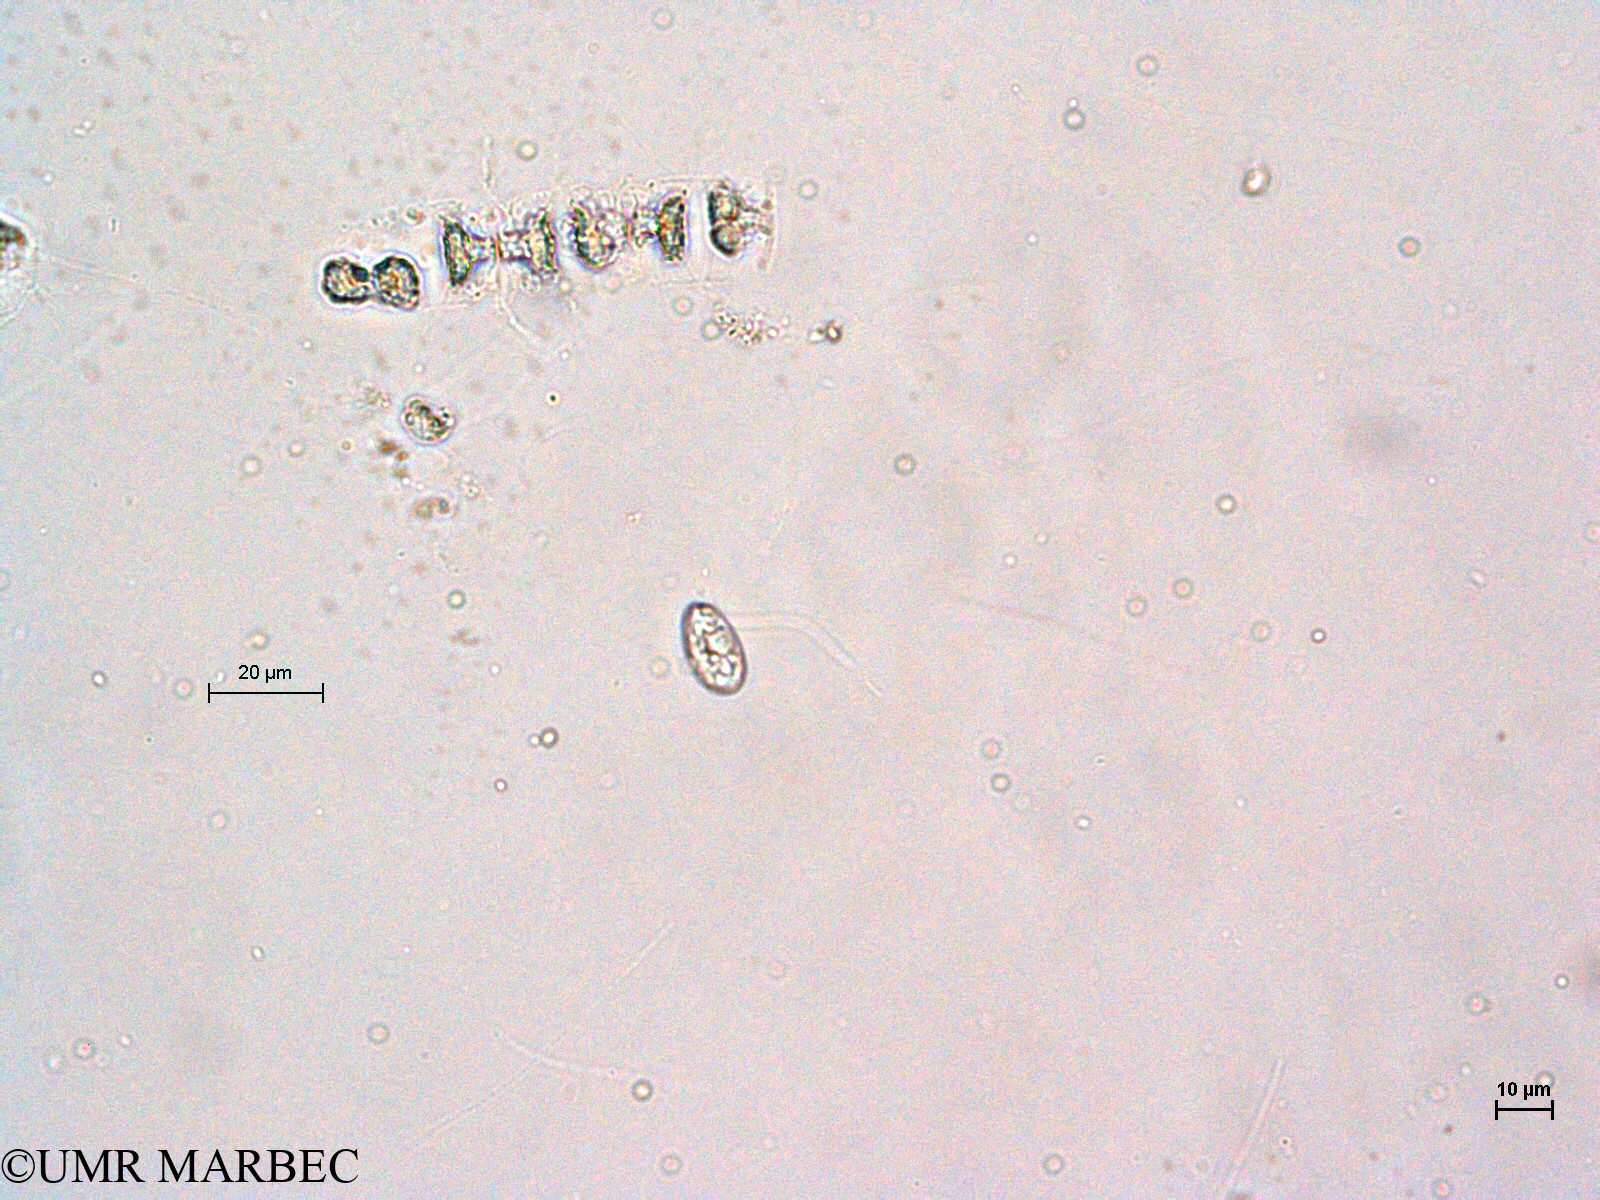 phyto/Thau_Lagoon/THAU_station1/GELAMED 2010/Chaetoceros sp5 et Nanoflagellé 2 (3)(copy).jpg